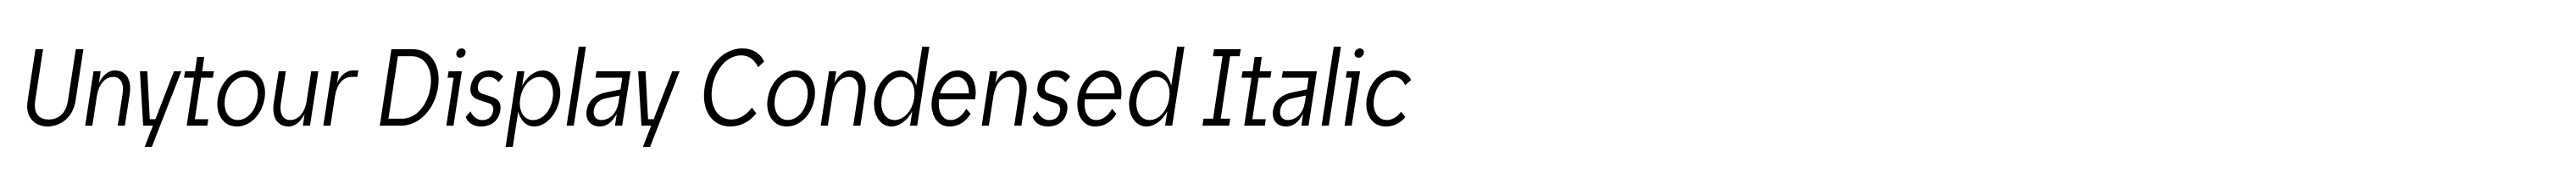 Unytour Display Condensed Italic